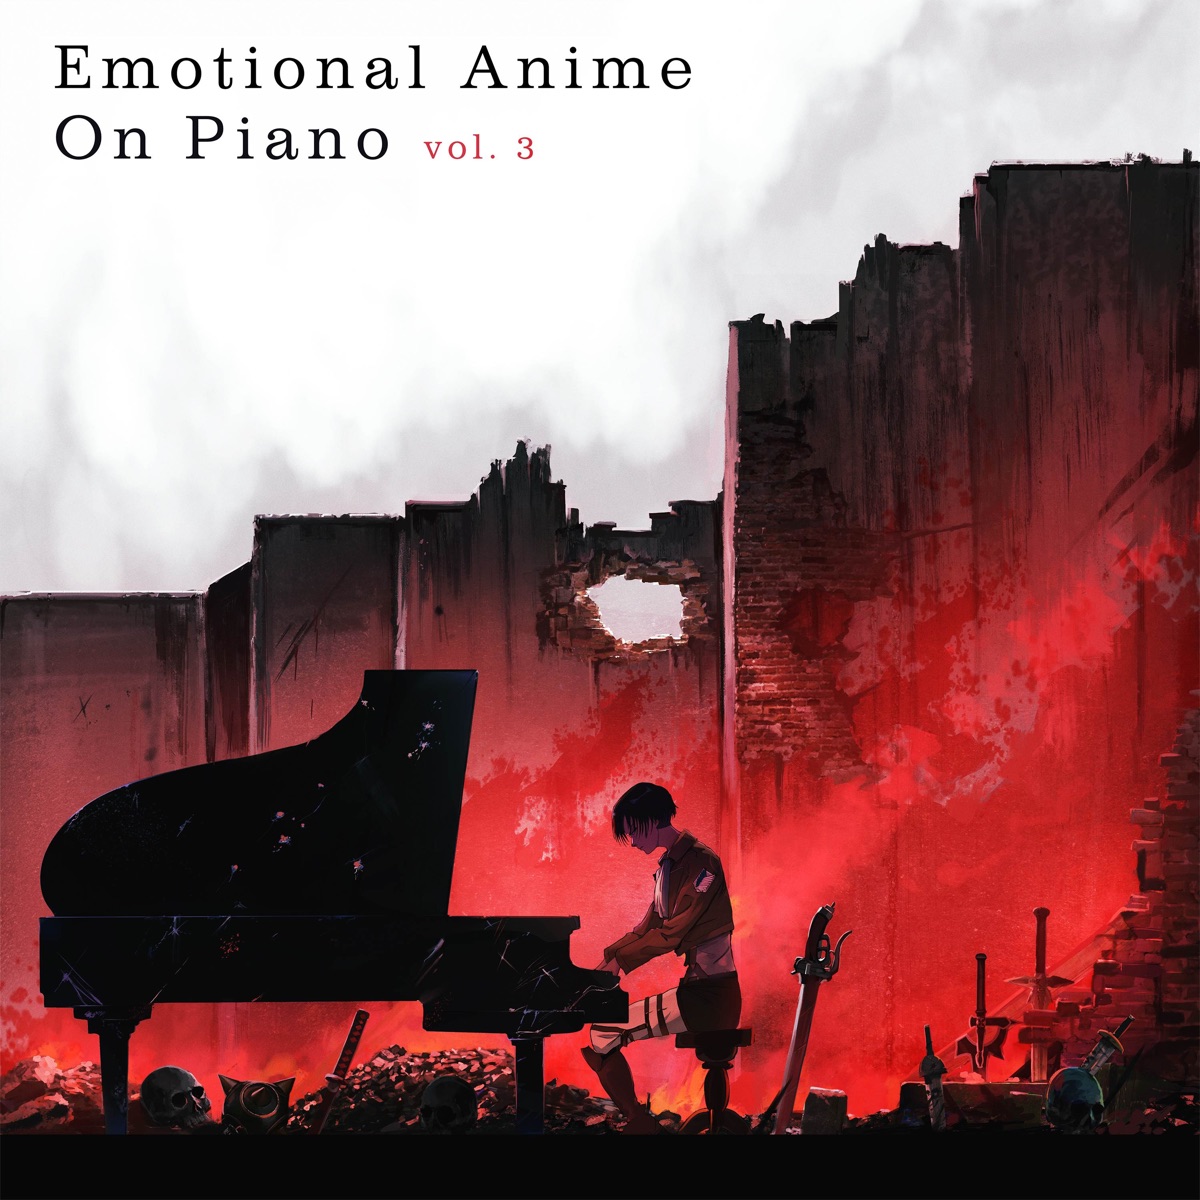 Hikaru Nara - Mandolin & Piano Ver (From Your Lie in April) - Single -  Album by BloggerMandolin - Apple Music